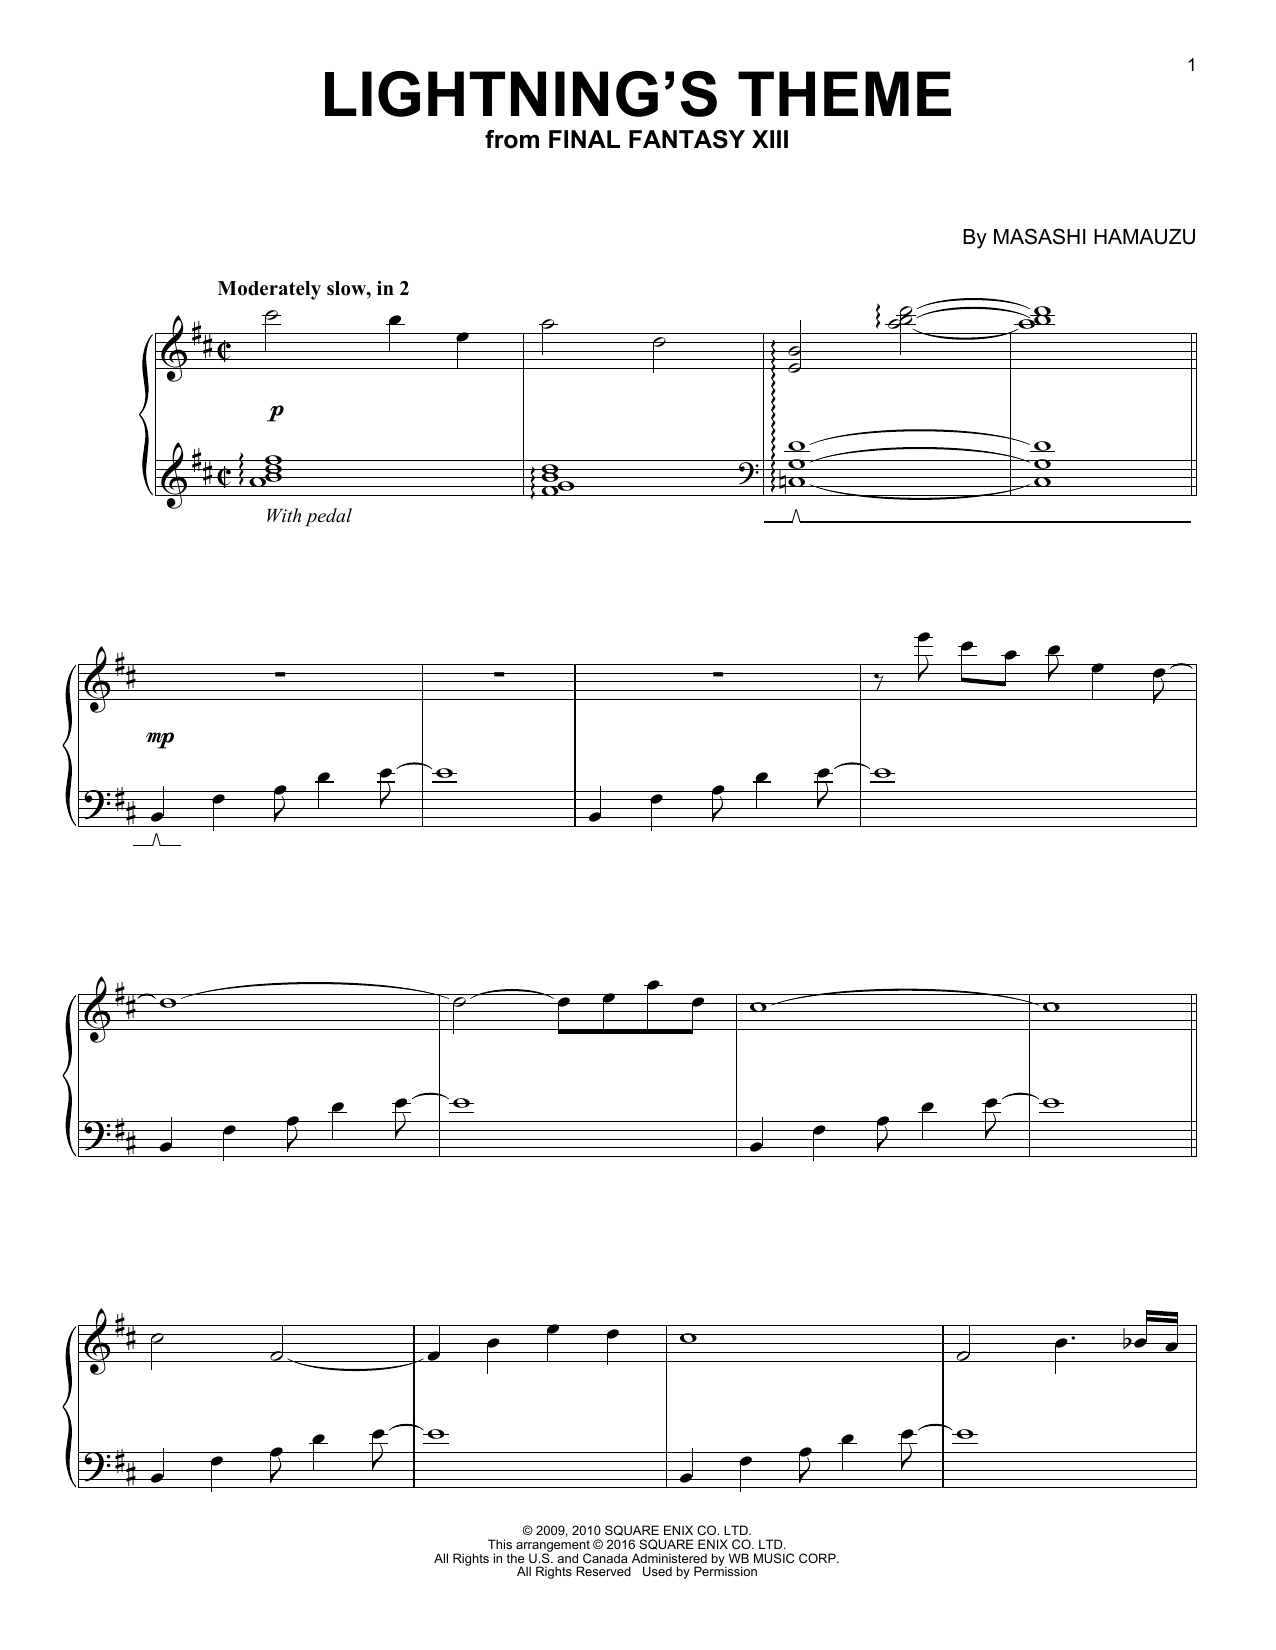 Download Masashi Hamauzu Lightning's Theme Sheet Music and learn how to play Piano PDF digital score in minutes